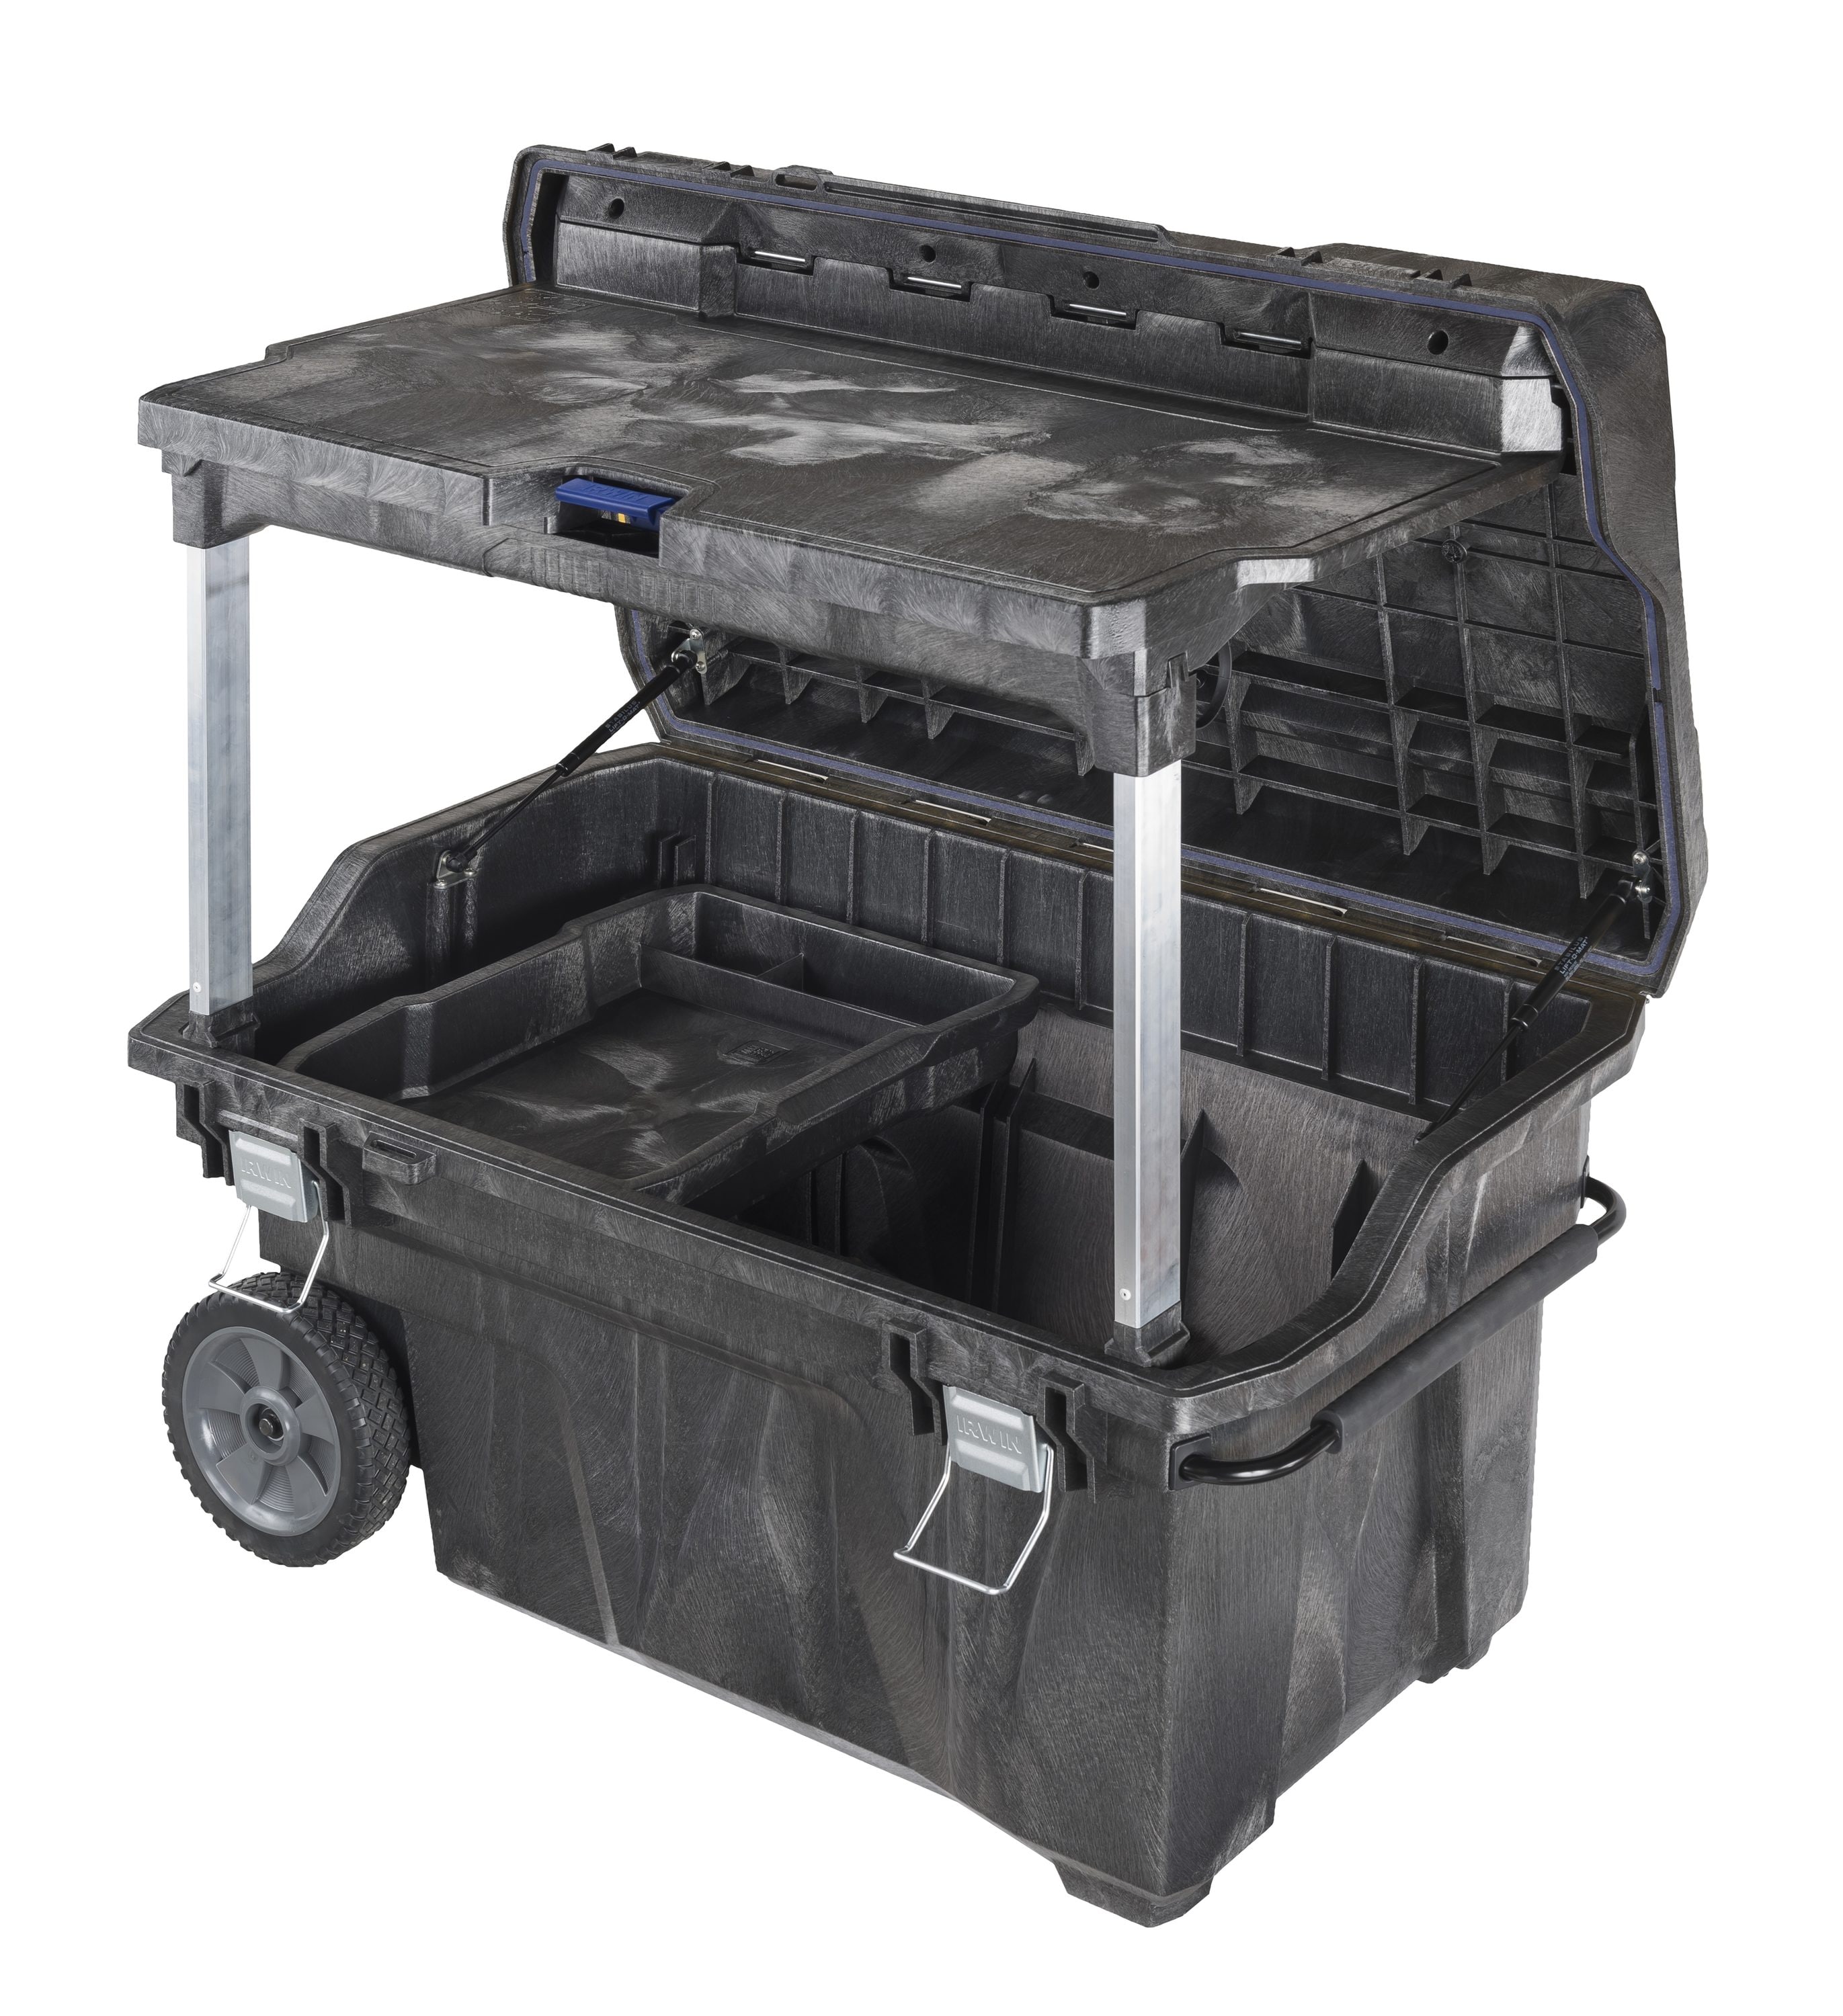 Aluminum tidy tank/tool box  Classifieds for Jobs, Rentals, Cars,  Furniture and Free Stuff